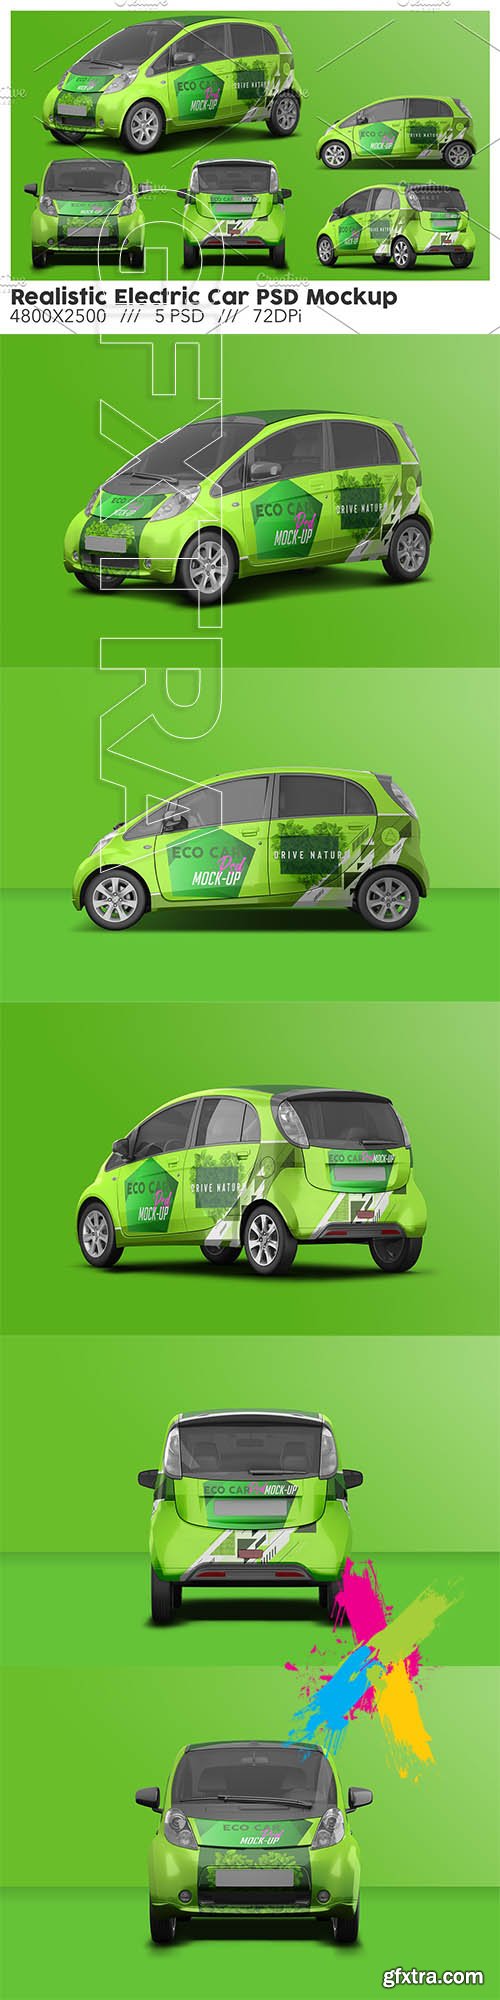 CreativeMarket - Realistic Electric Car PSD Mockup 5742767